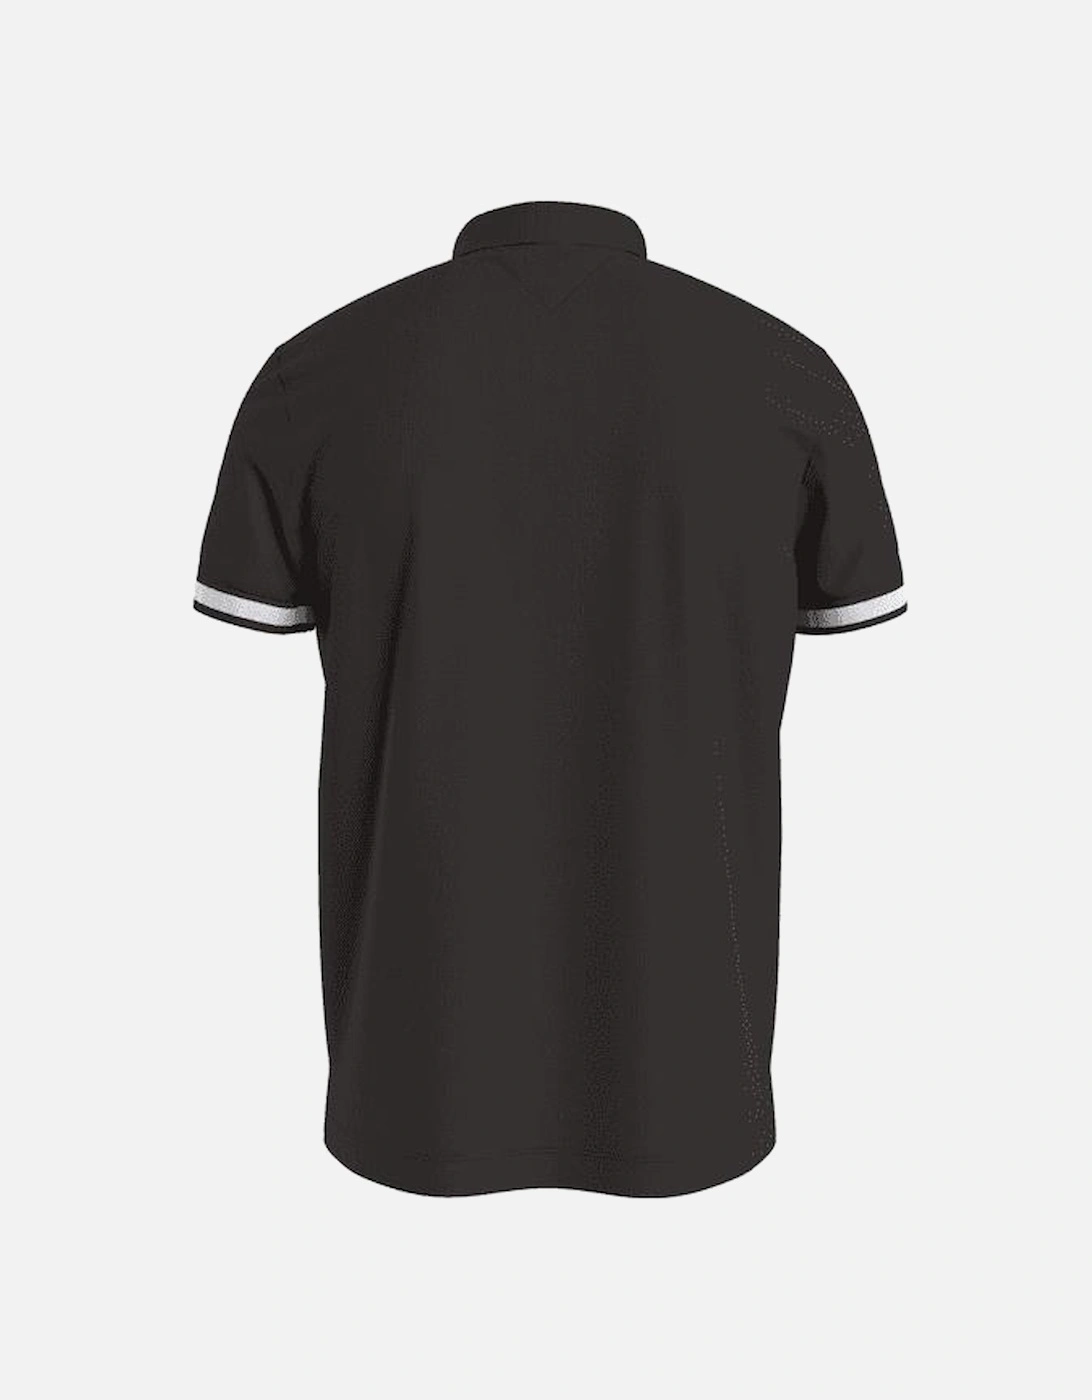 Emboidered Logo Short Sleeve Black Polo Shirt